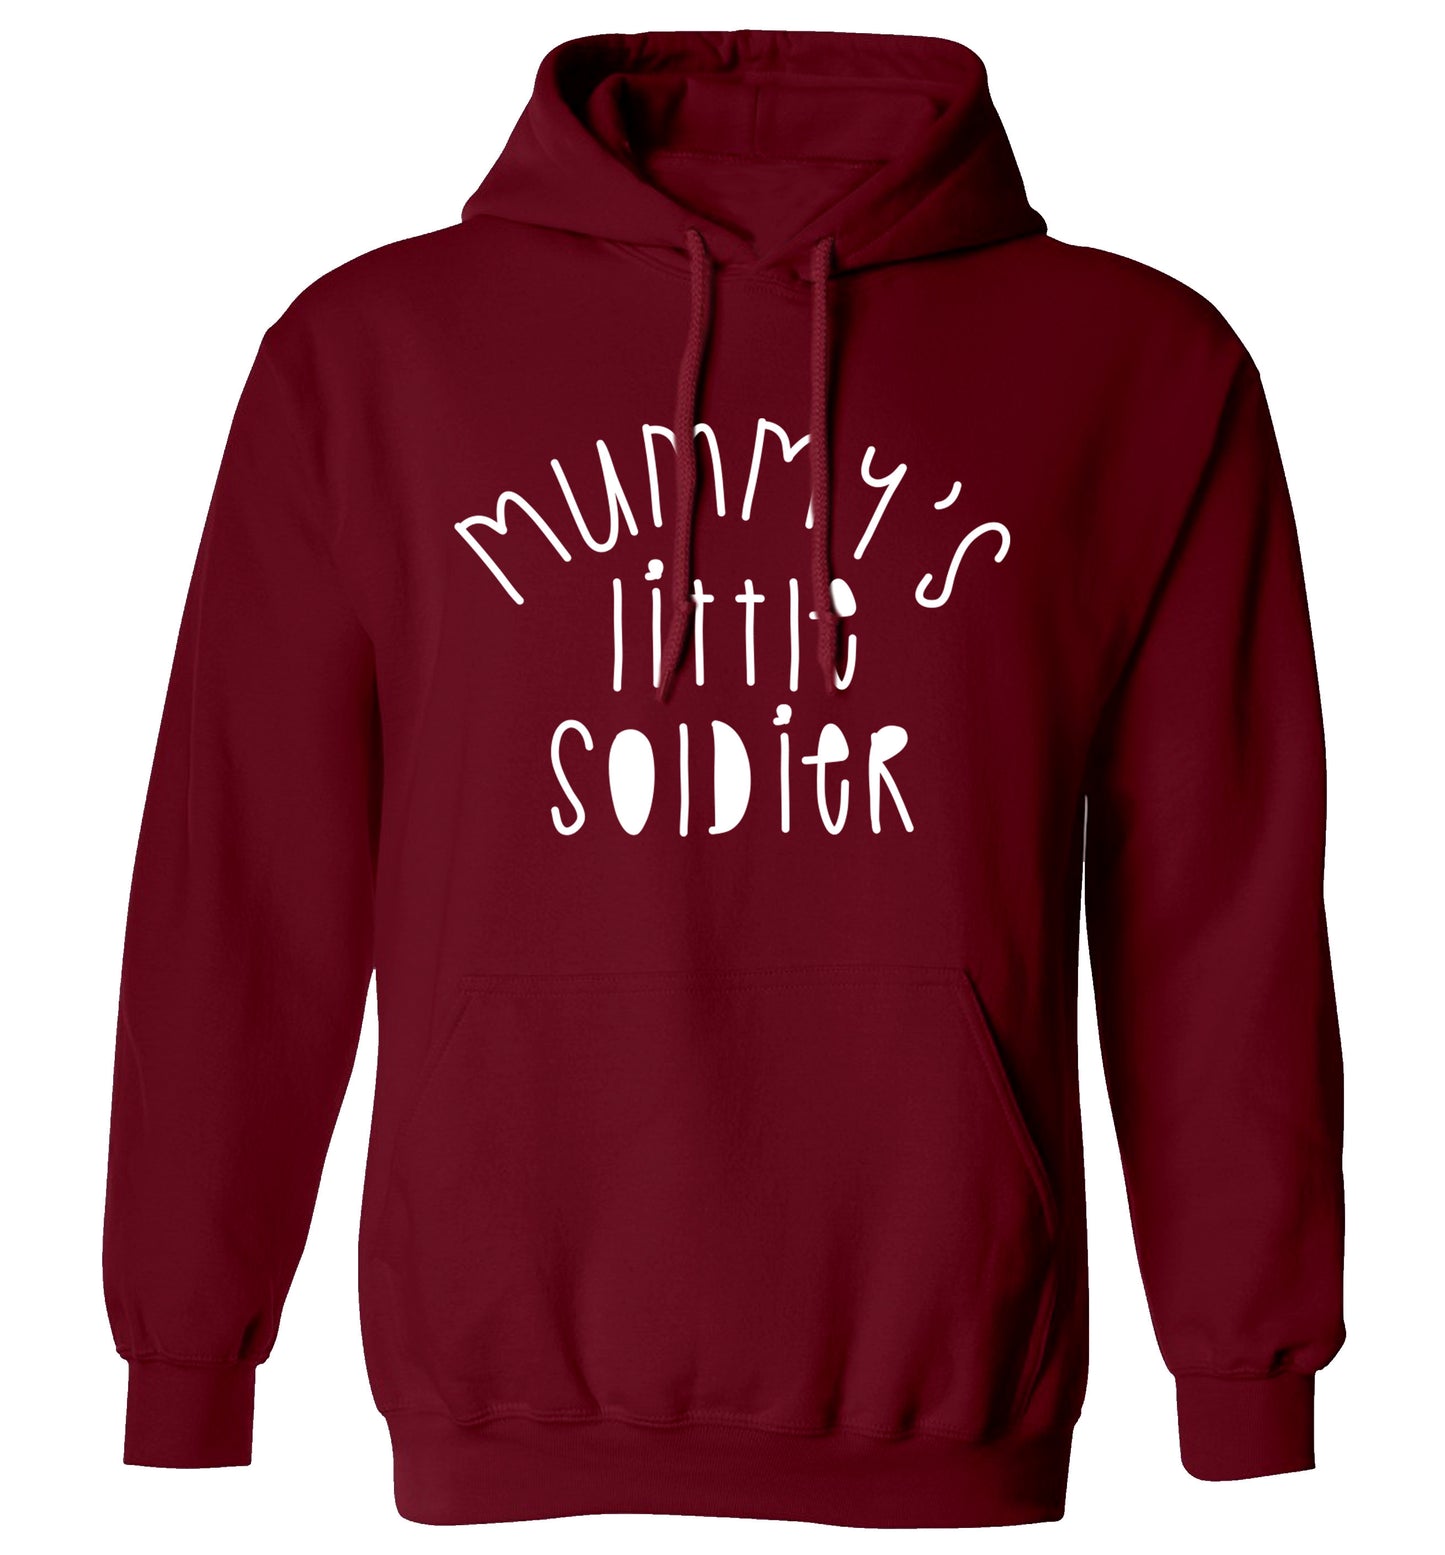 Mummy's little soldier adults unisex maroon hoodie 2XL